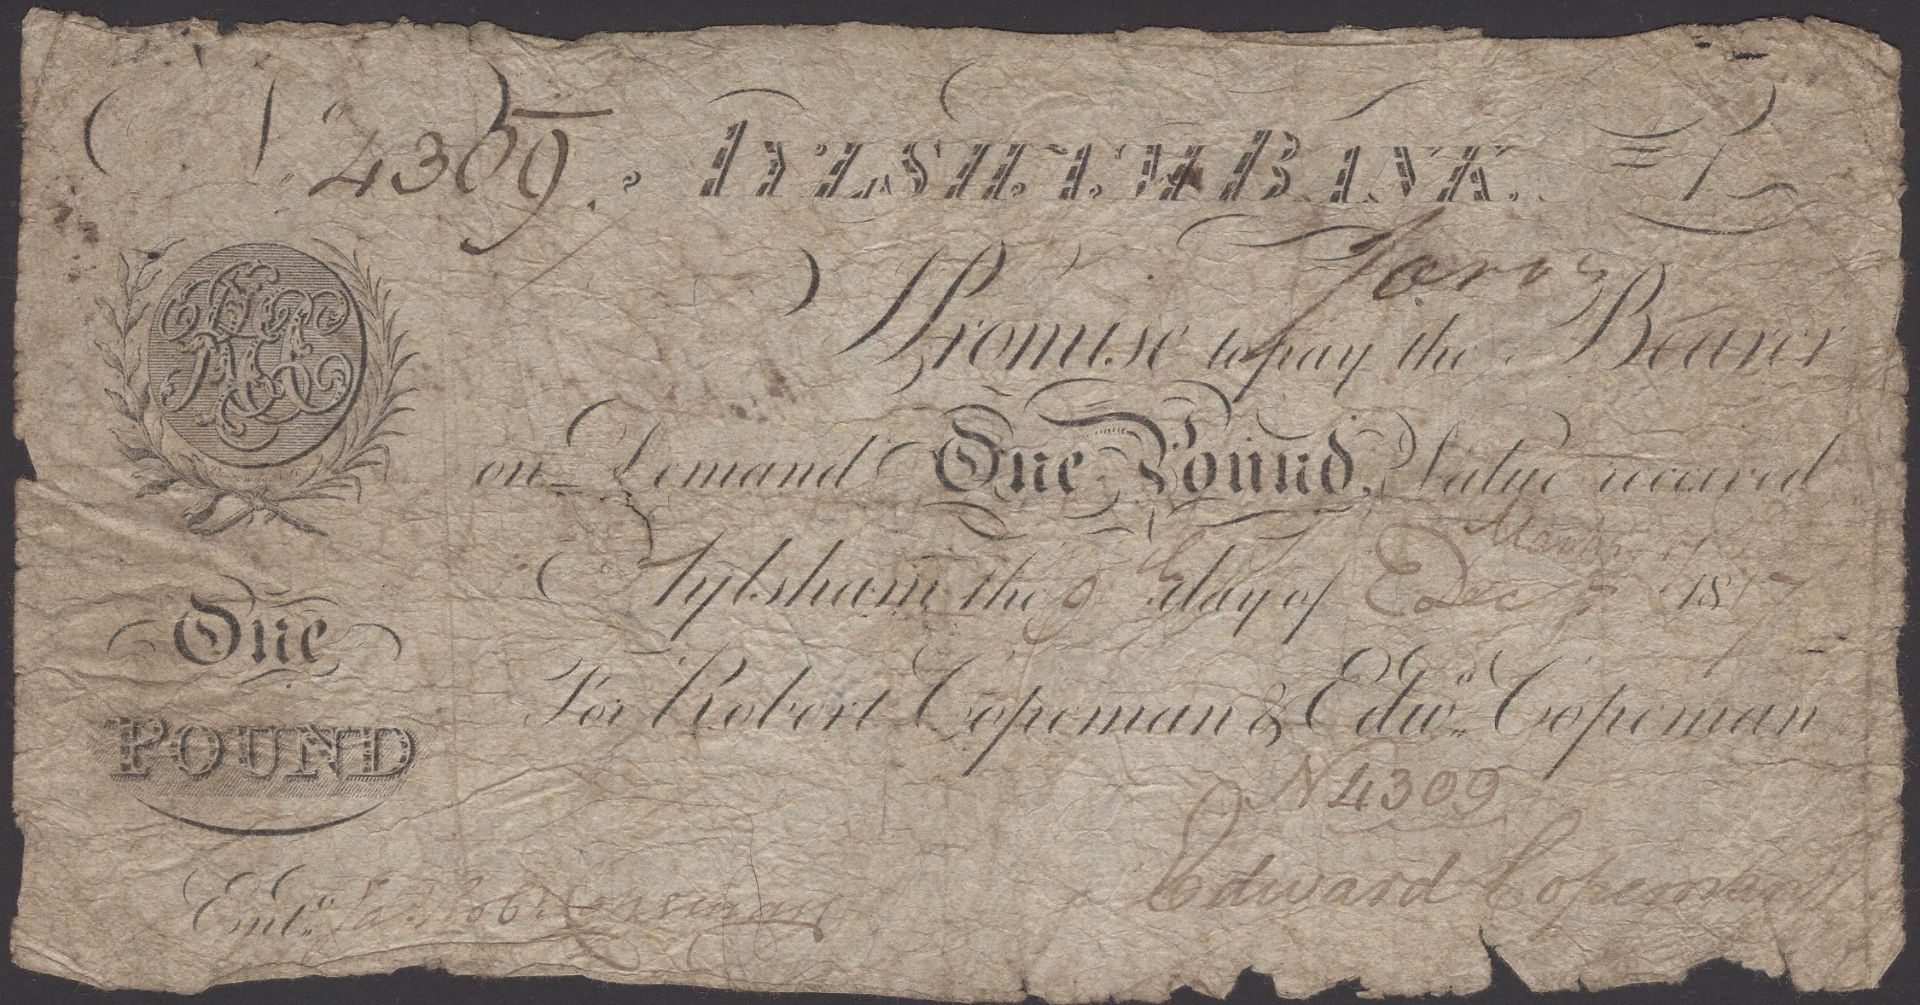 Aylsham Bank, for Robert Copeman & Edwd Copeman, Â£1, 9 December 1817, serial number 4359, si...